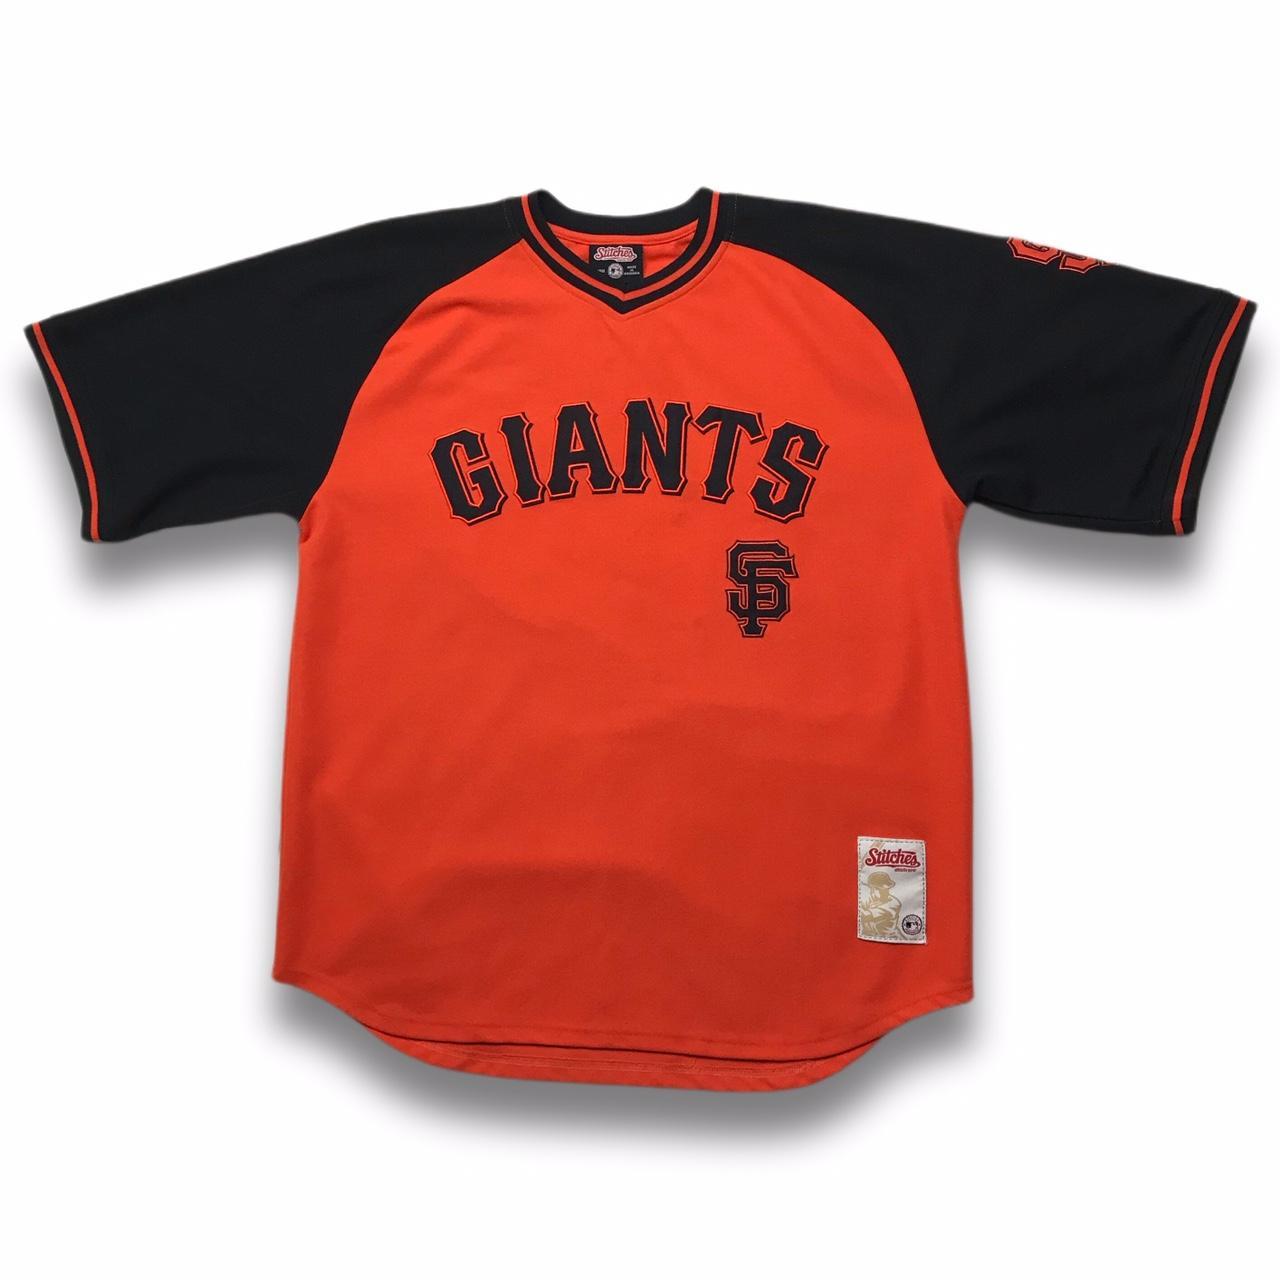 San Francisco Giants Sciarrino jersey. Priced to - Depop